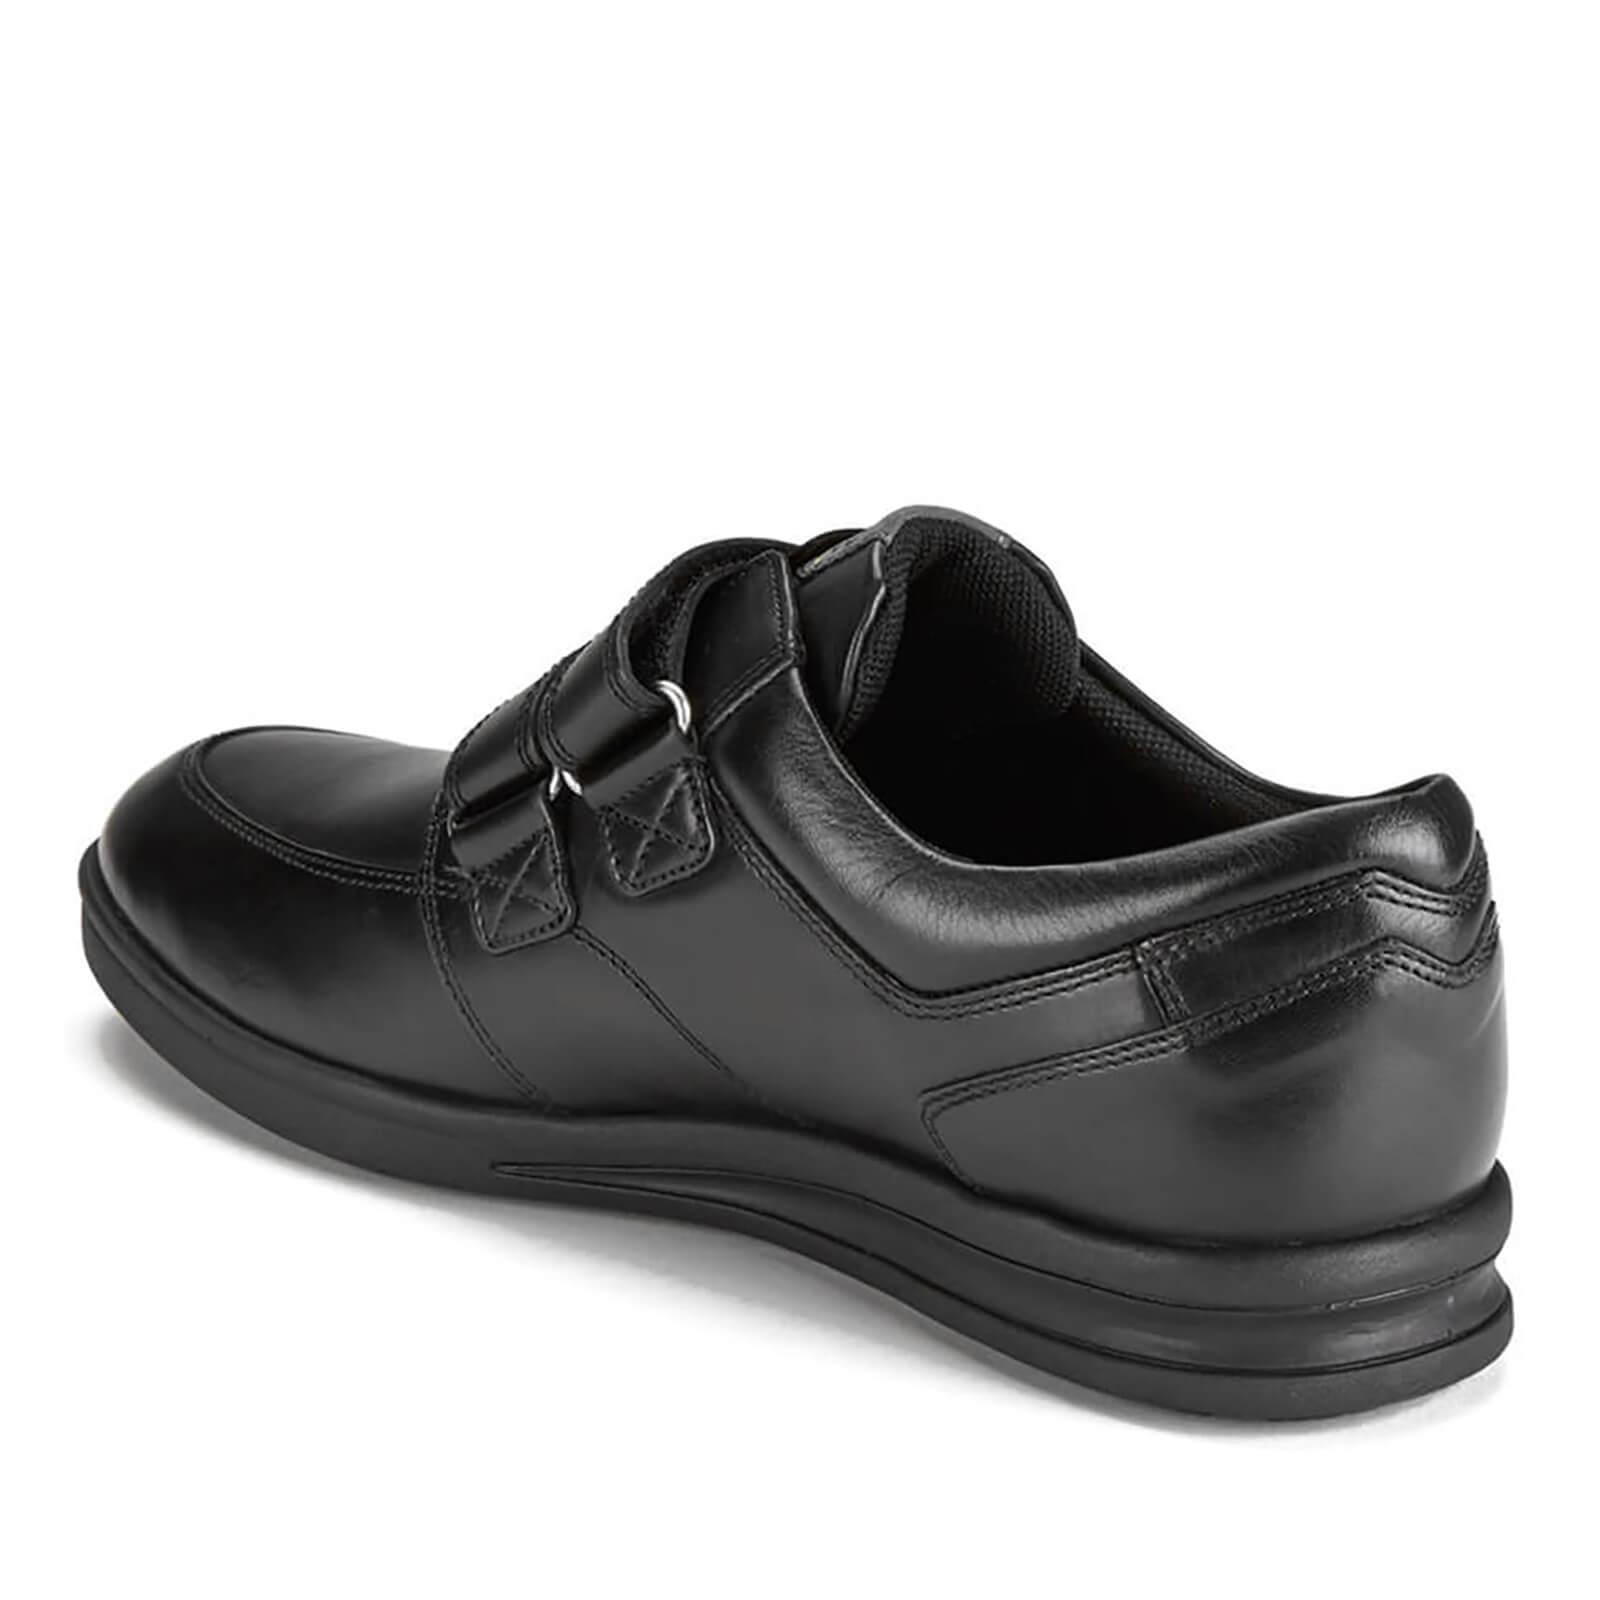 NEW KICKERS TROIKO MEN'S BLACK LEATHER SLIP SHOES SMART CASUAL Shoes